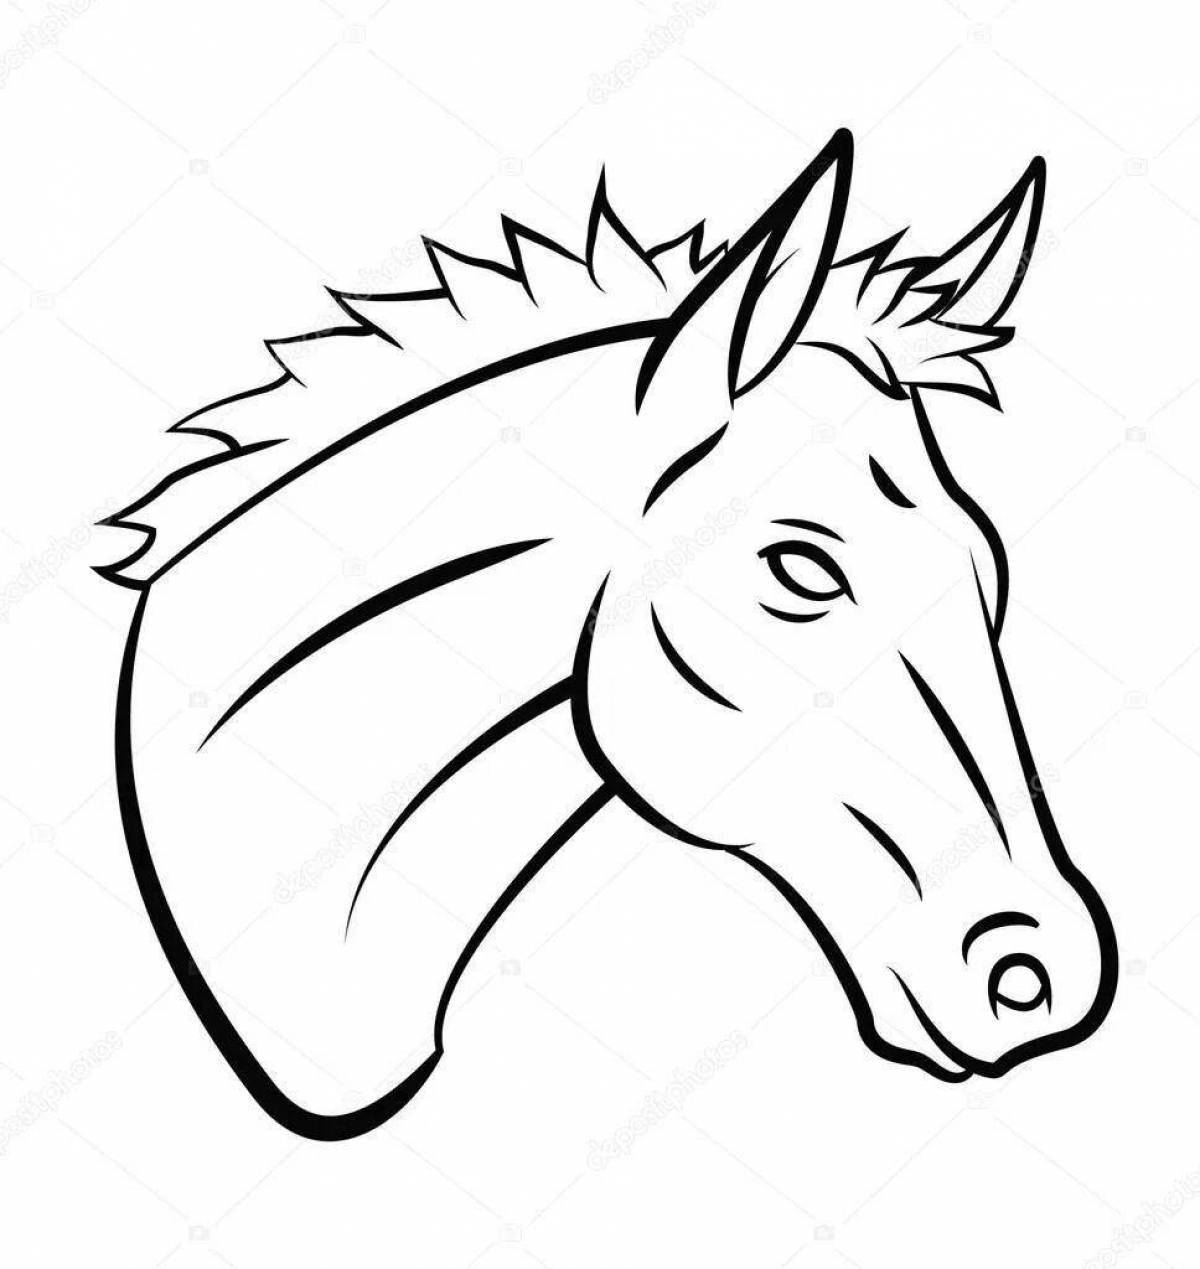 Dazzling horse head coloring book